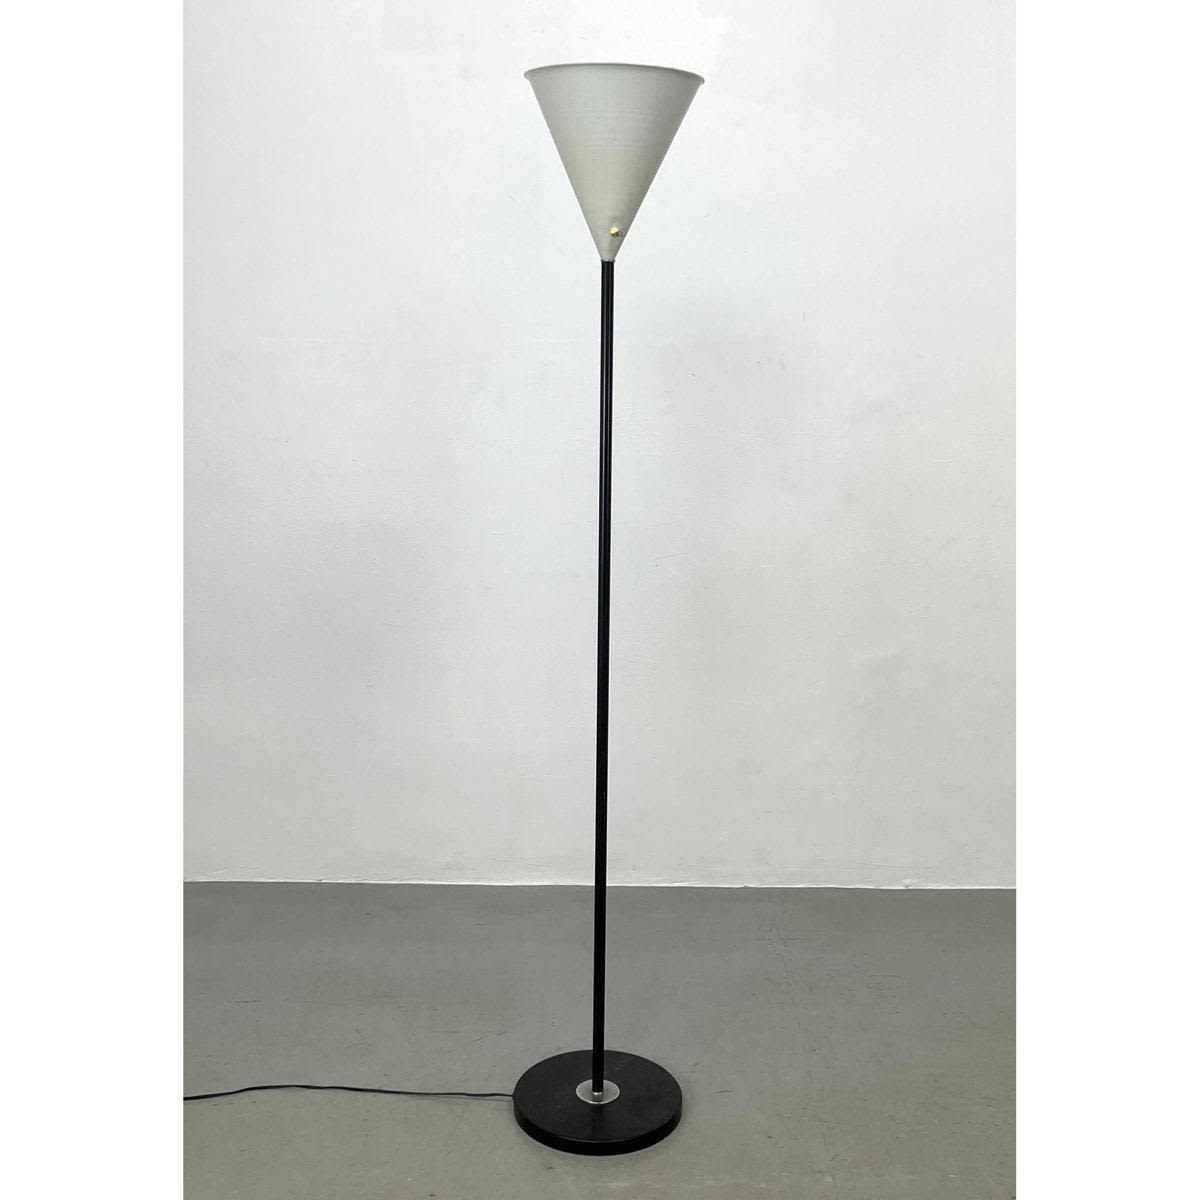 Cone Shade Torchiere Floor Lamp. Black